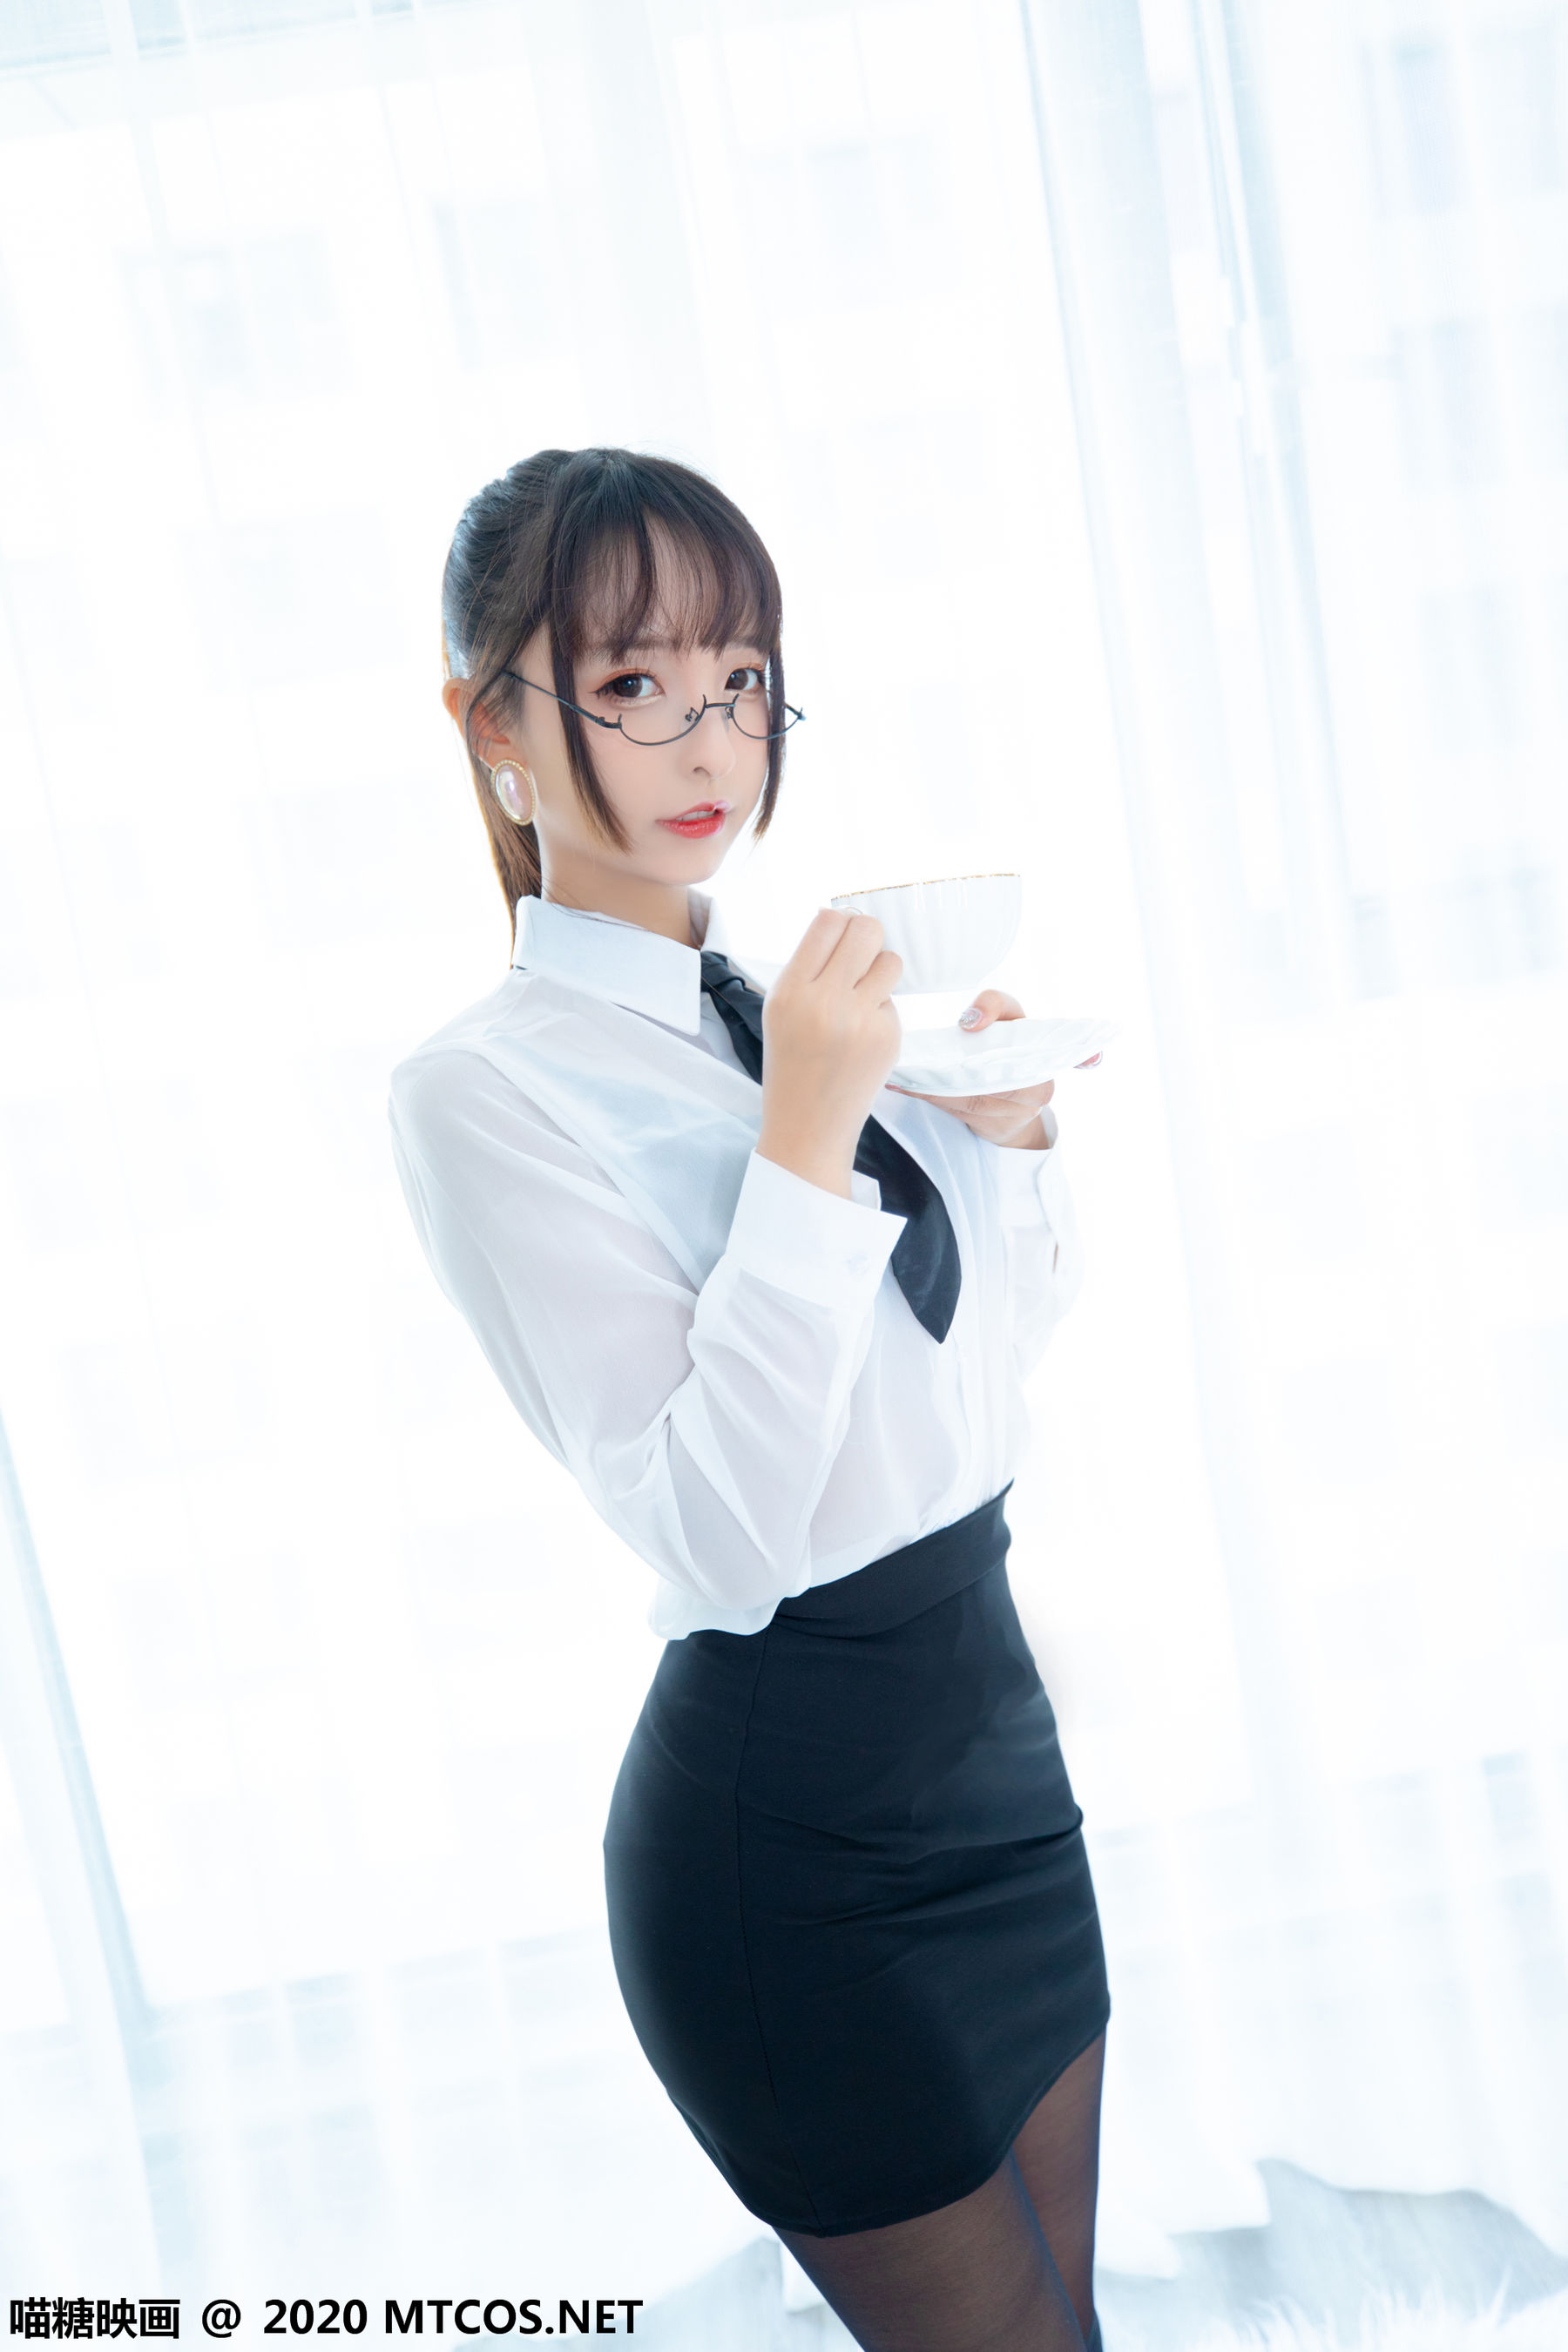 [糖] Vol.202 “OL uniform skirt” photo set